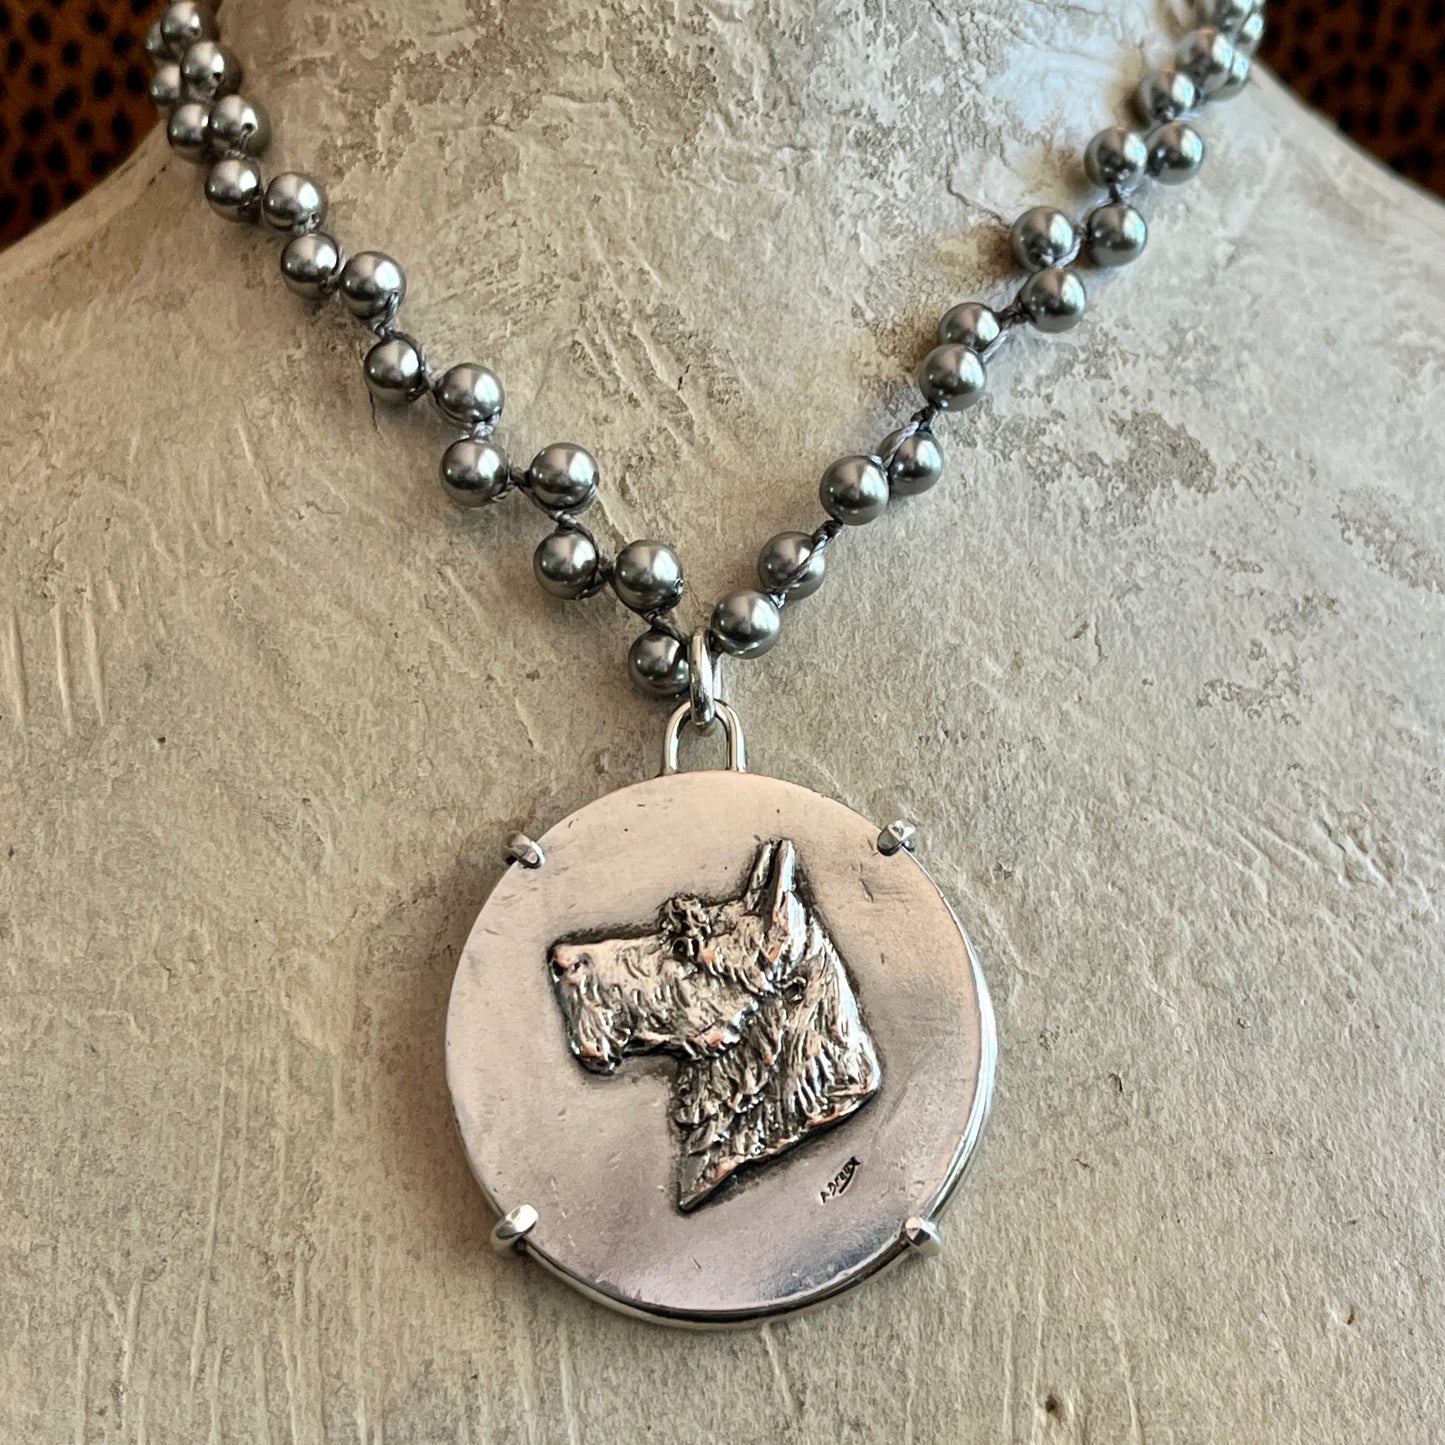 France Societe Des Terriers Dog Medal on Pearl Necklace